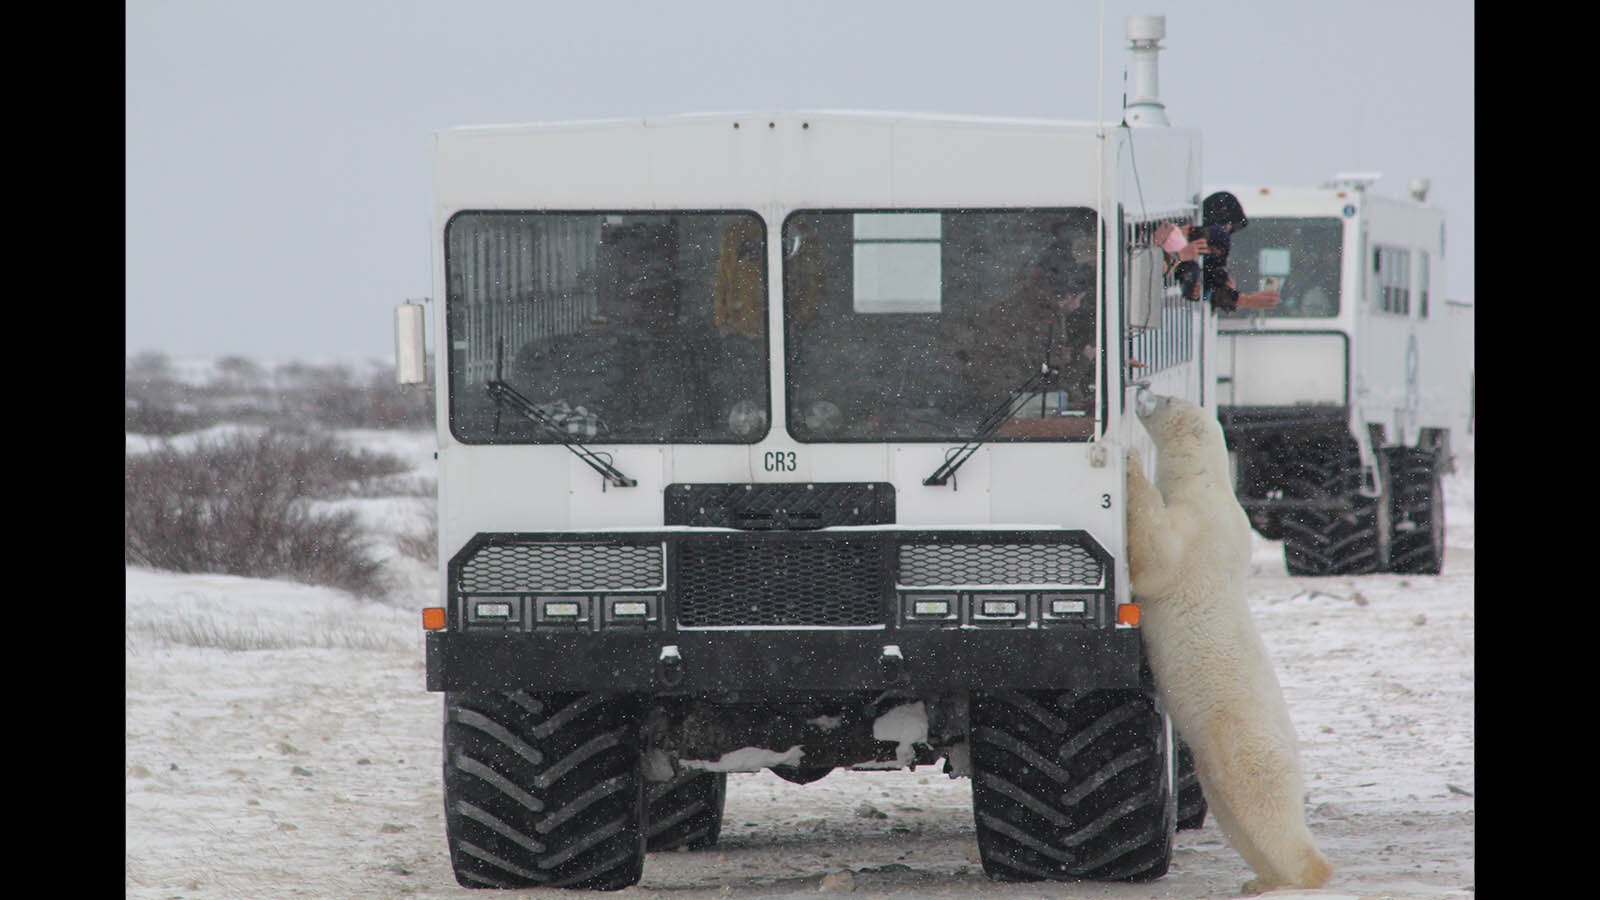 These tundra buggies were built for viewing polar bears along Hudson Bay near Churchill, Manitoba, Canada.